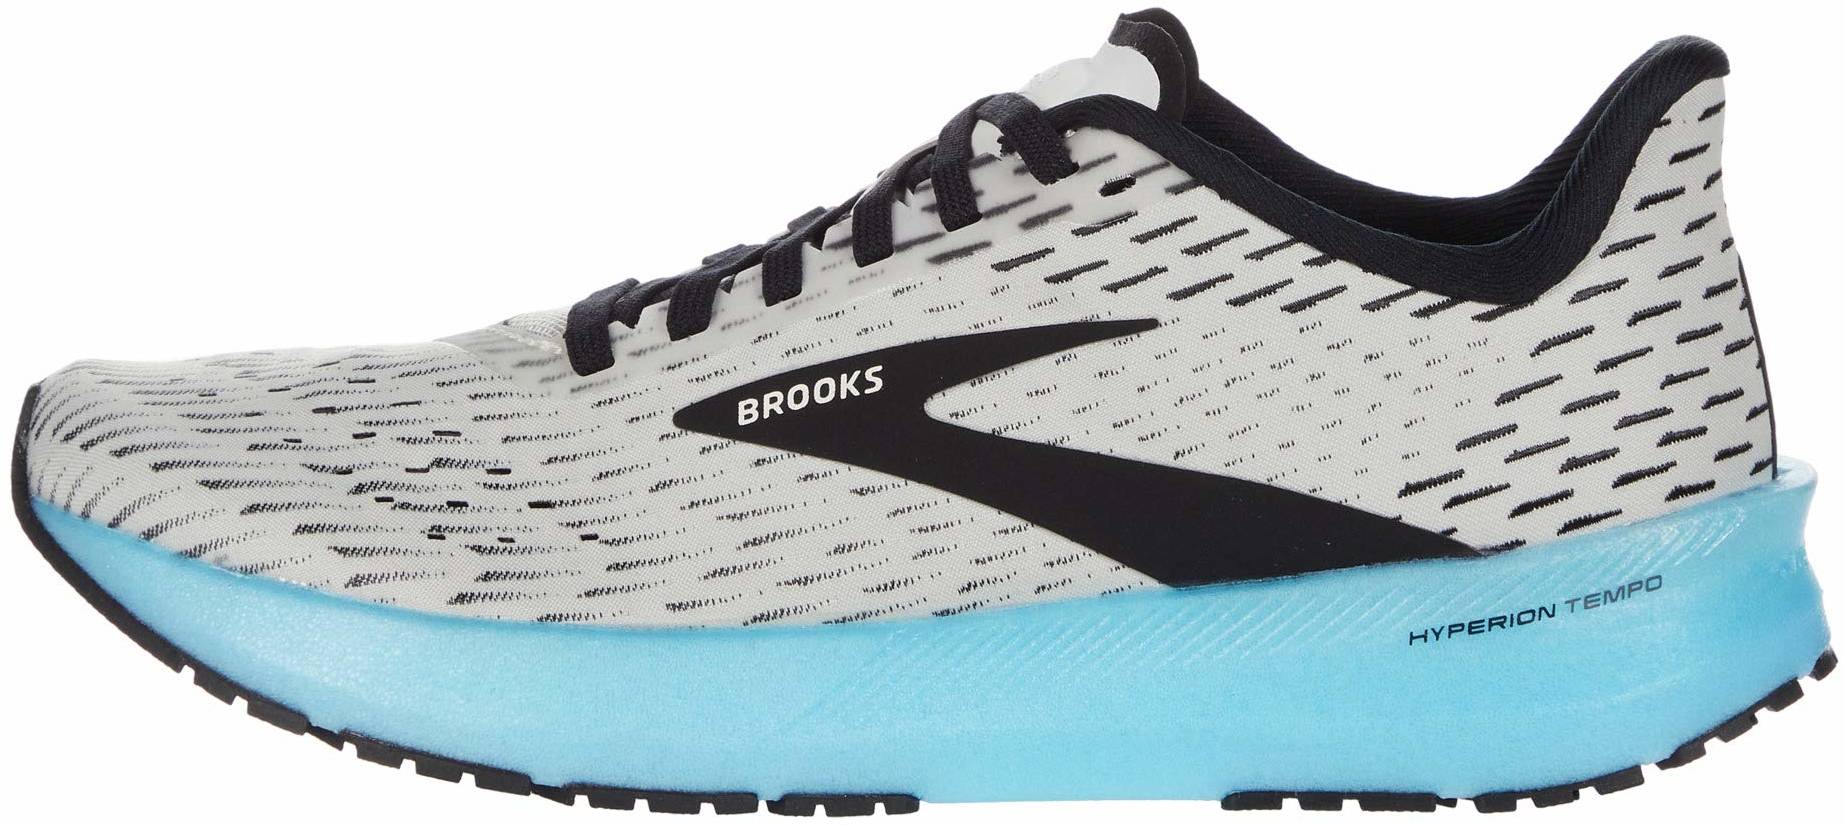 brooks running shoes complaints